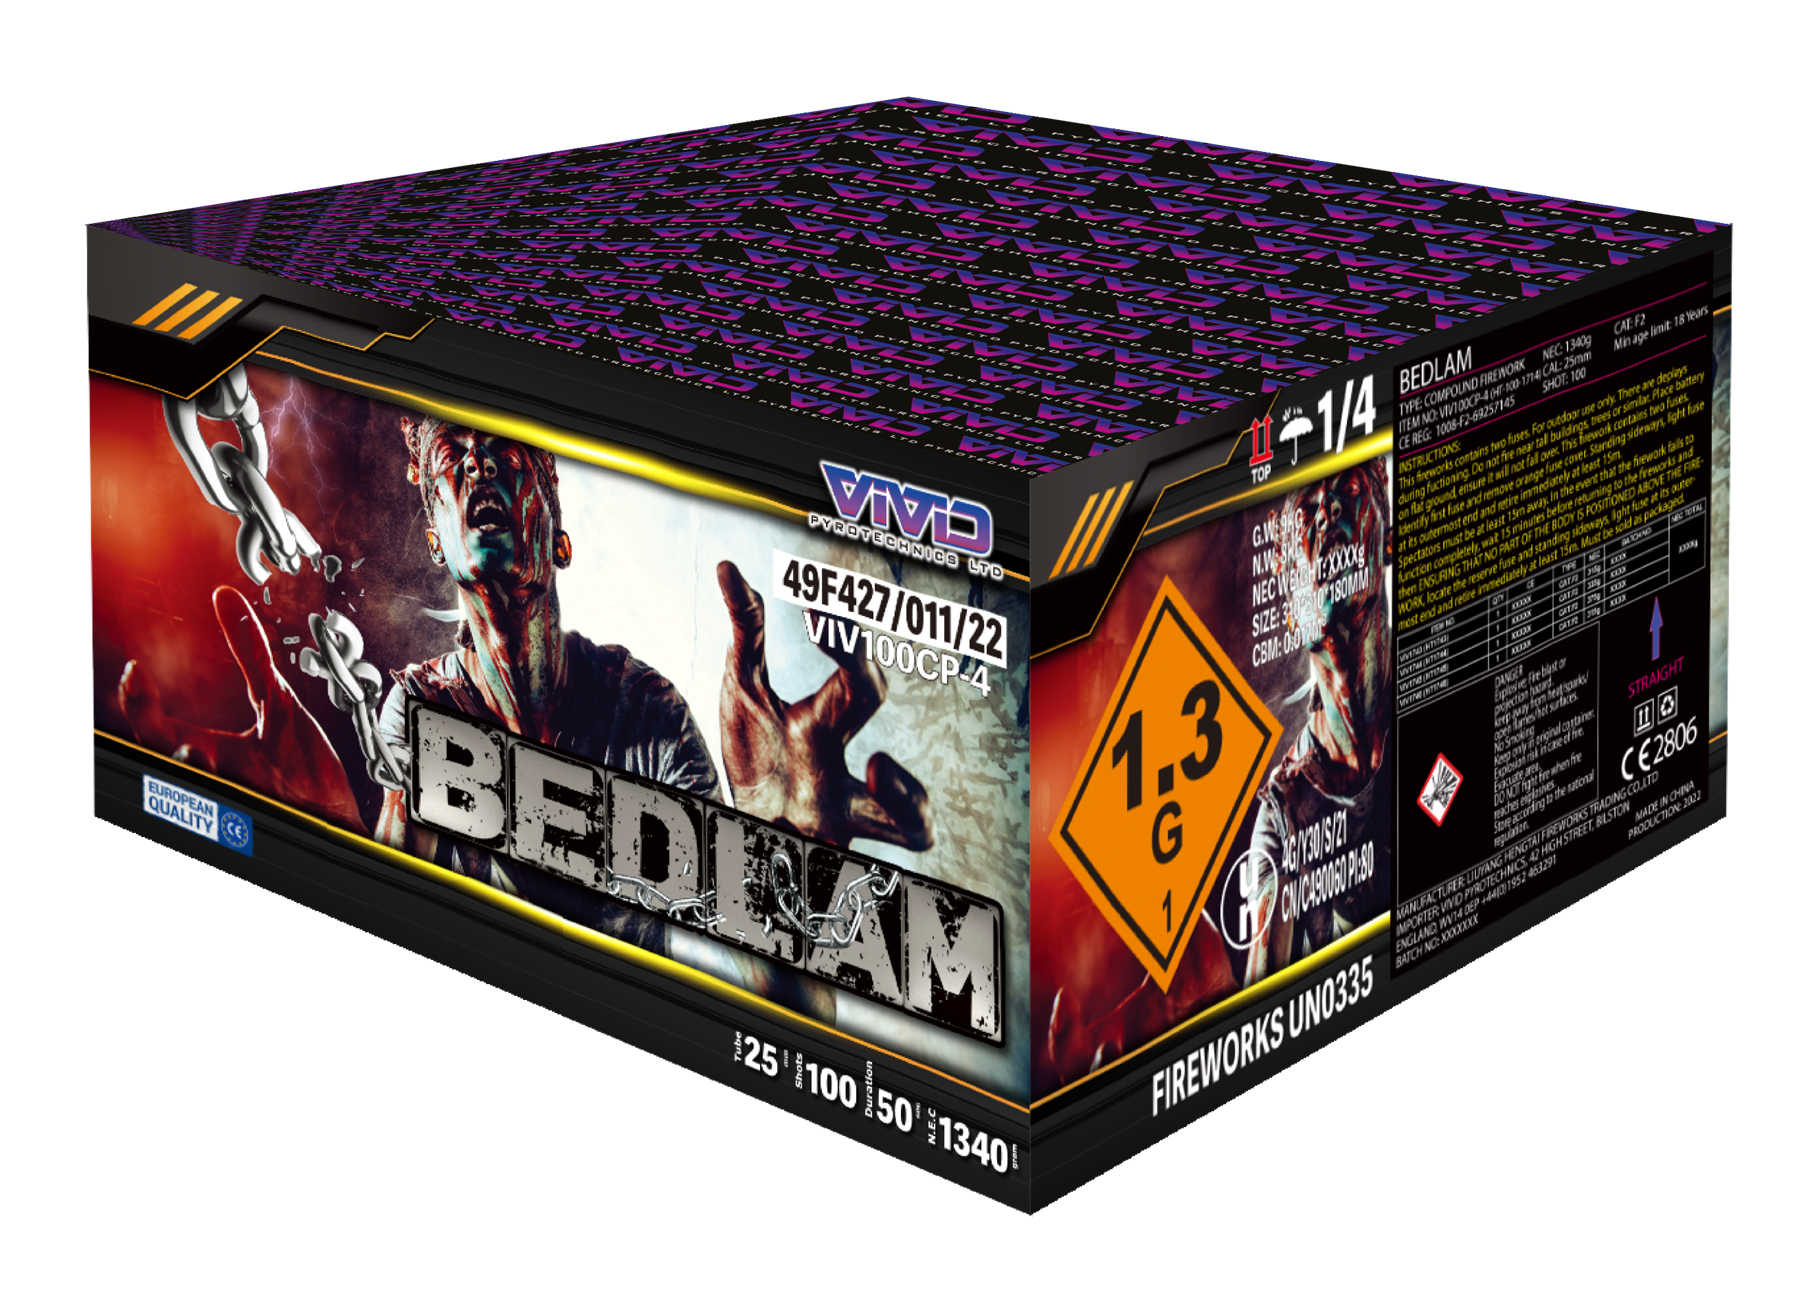 Bedlam product image